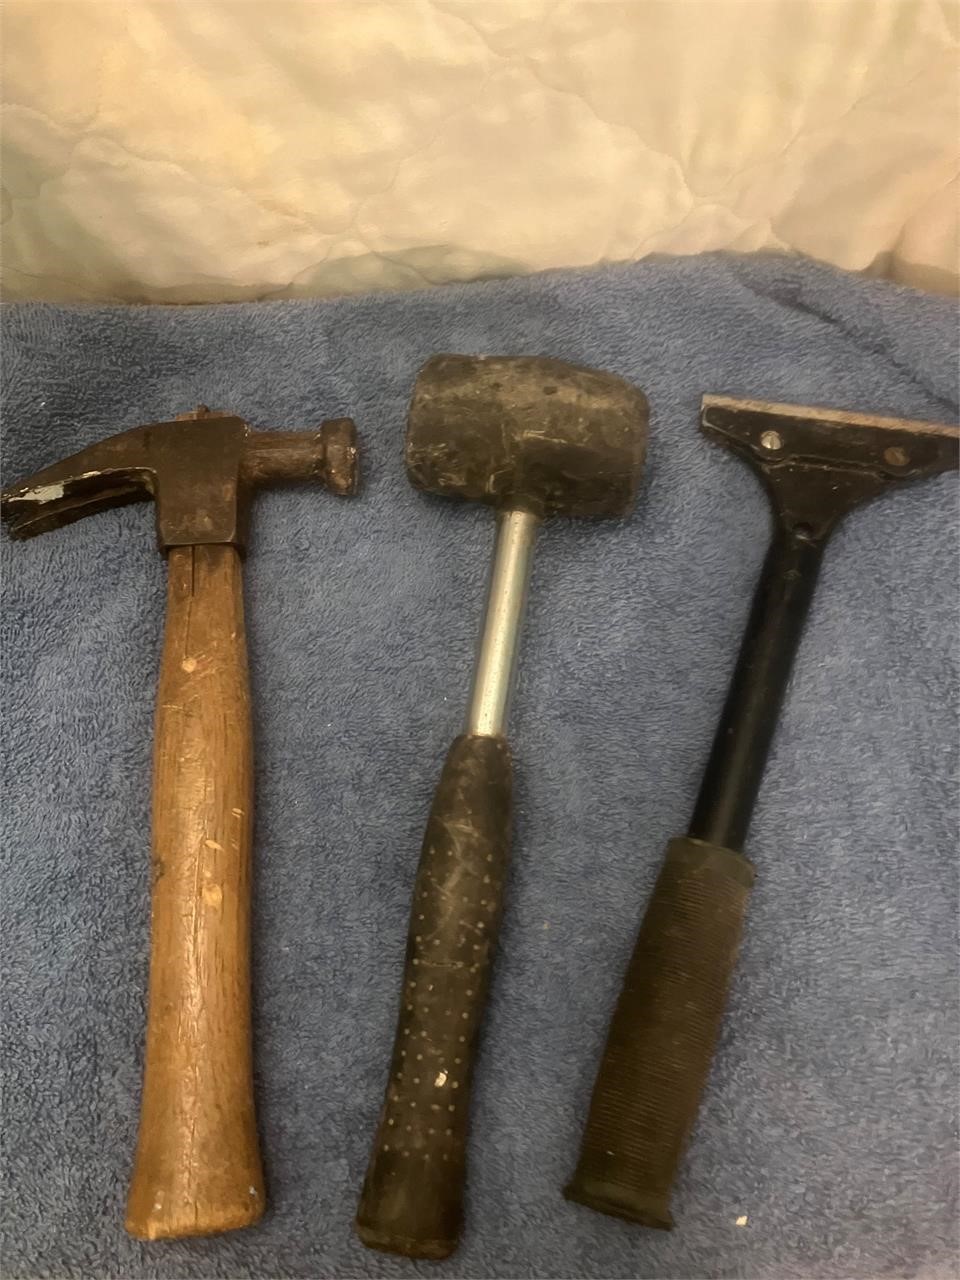 Tools-scraper hammer mallet